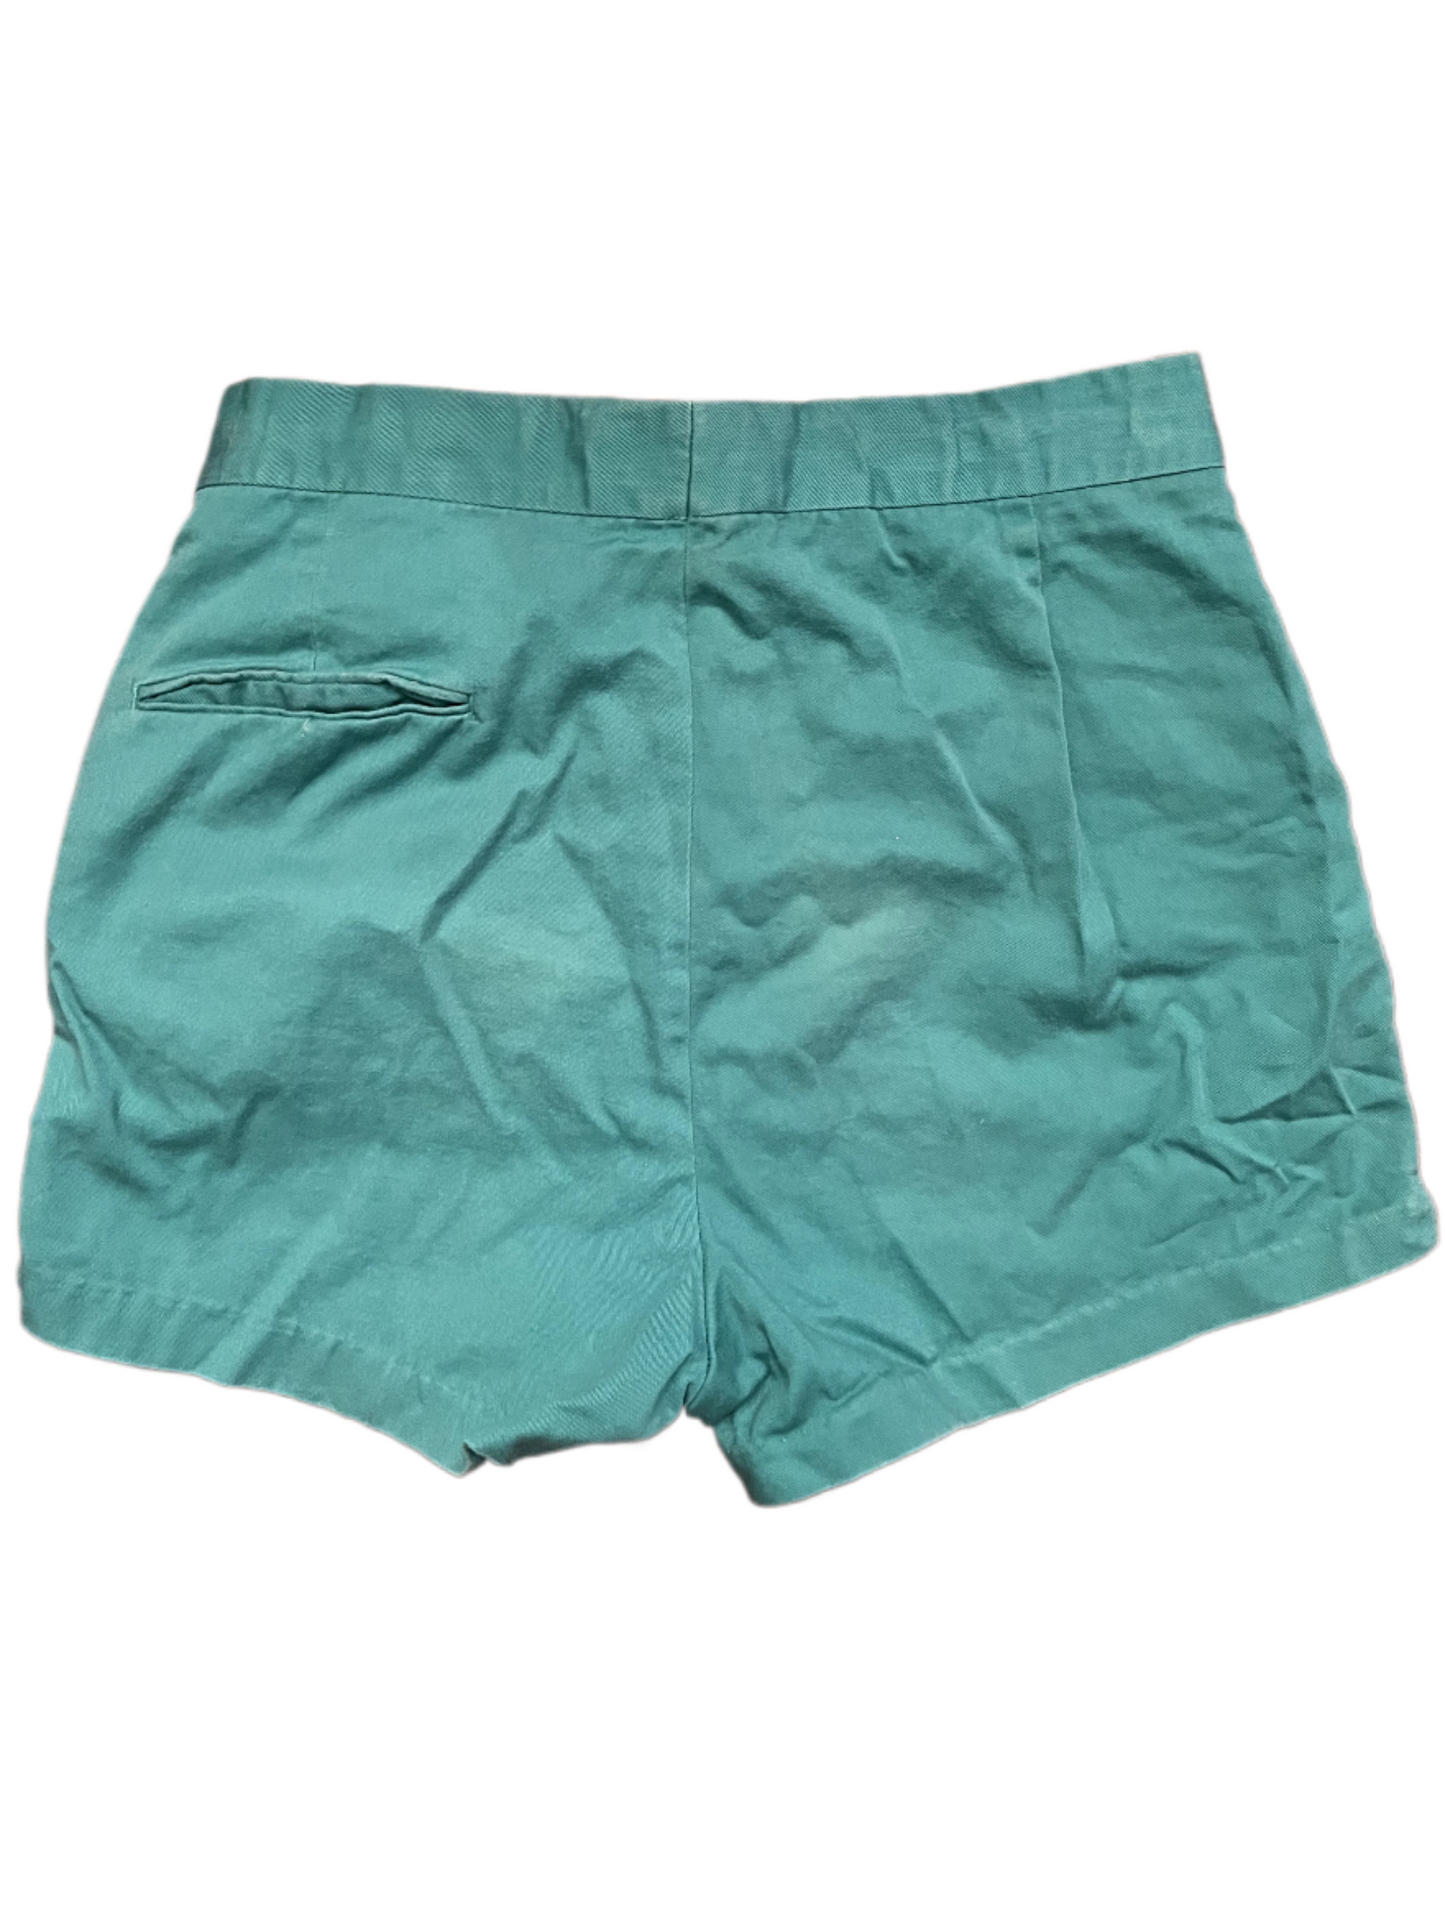 Men's Teal Lacoste Shorts- 34